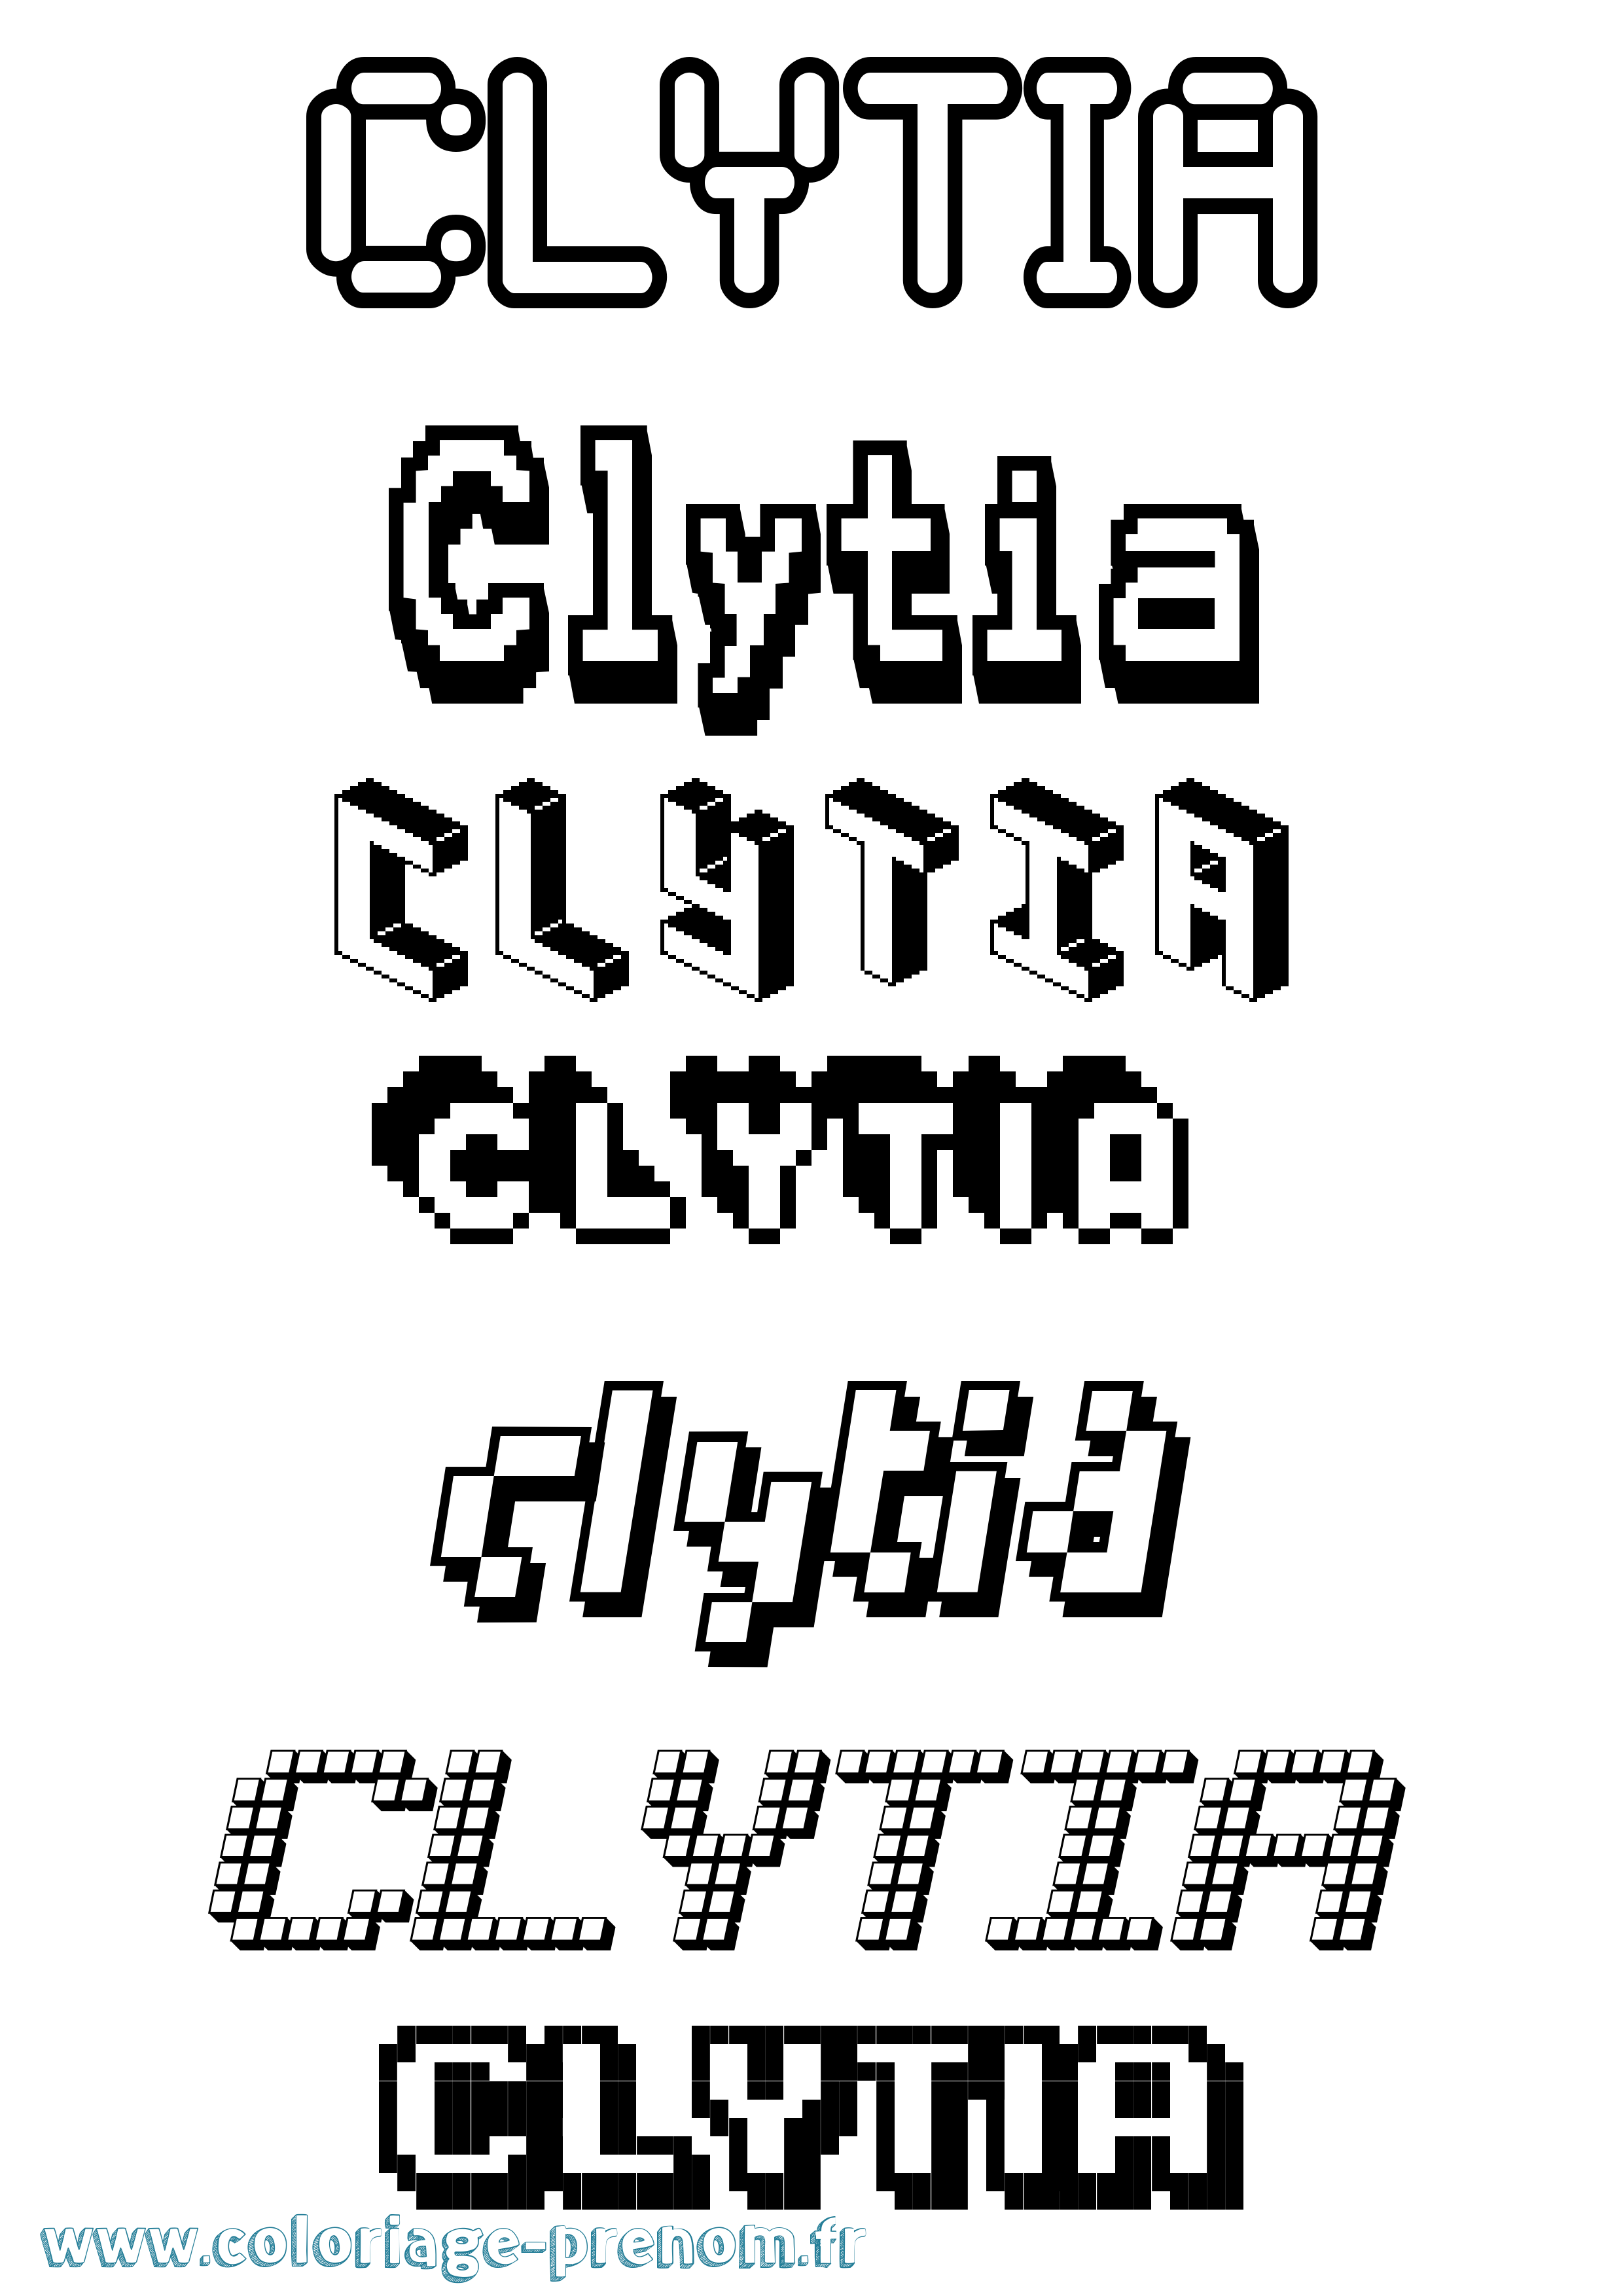 Coloriage prénom Clytia Pixel